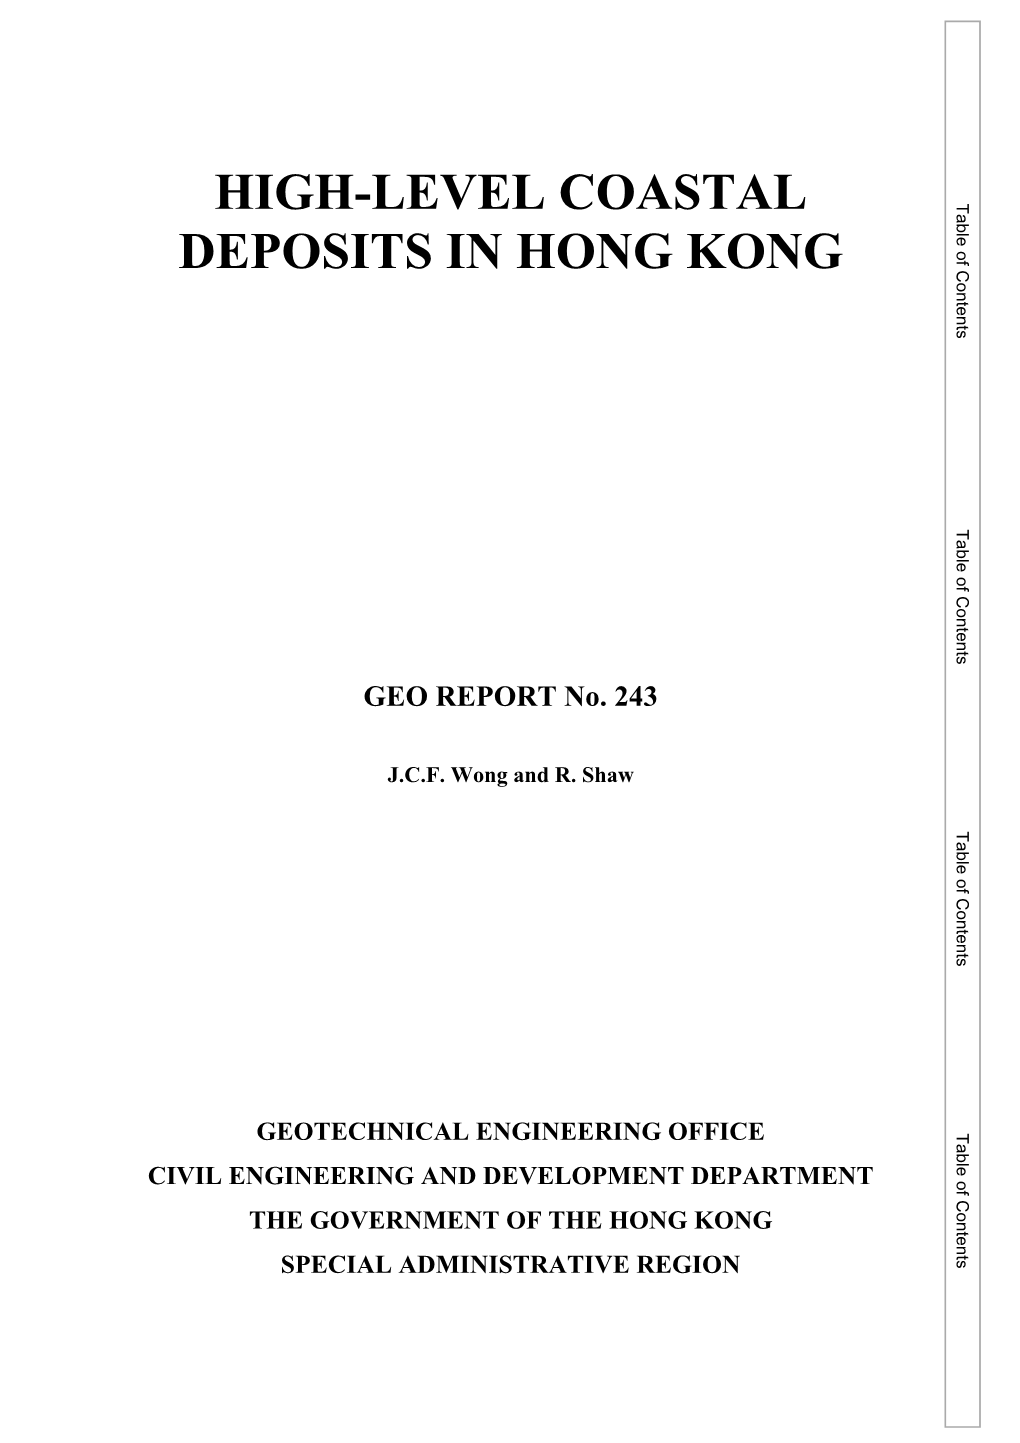 High-Level Coastal Deposits in Hong Kong